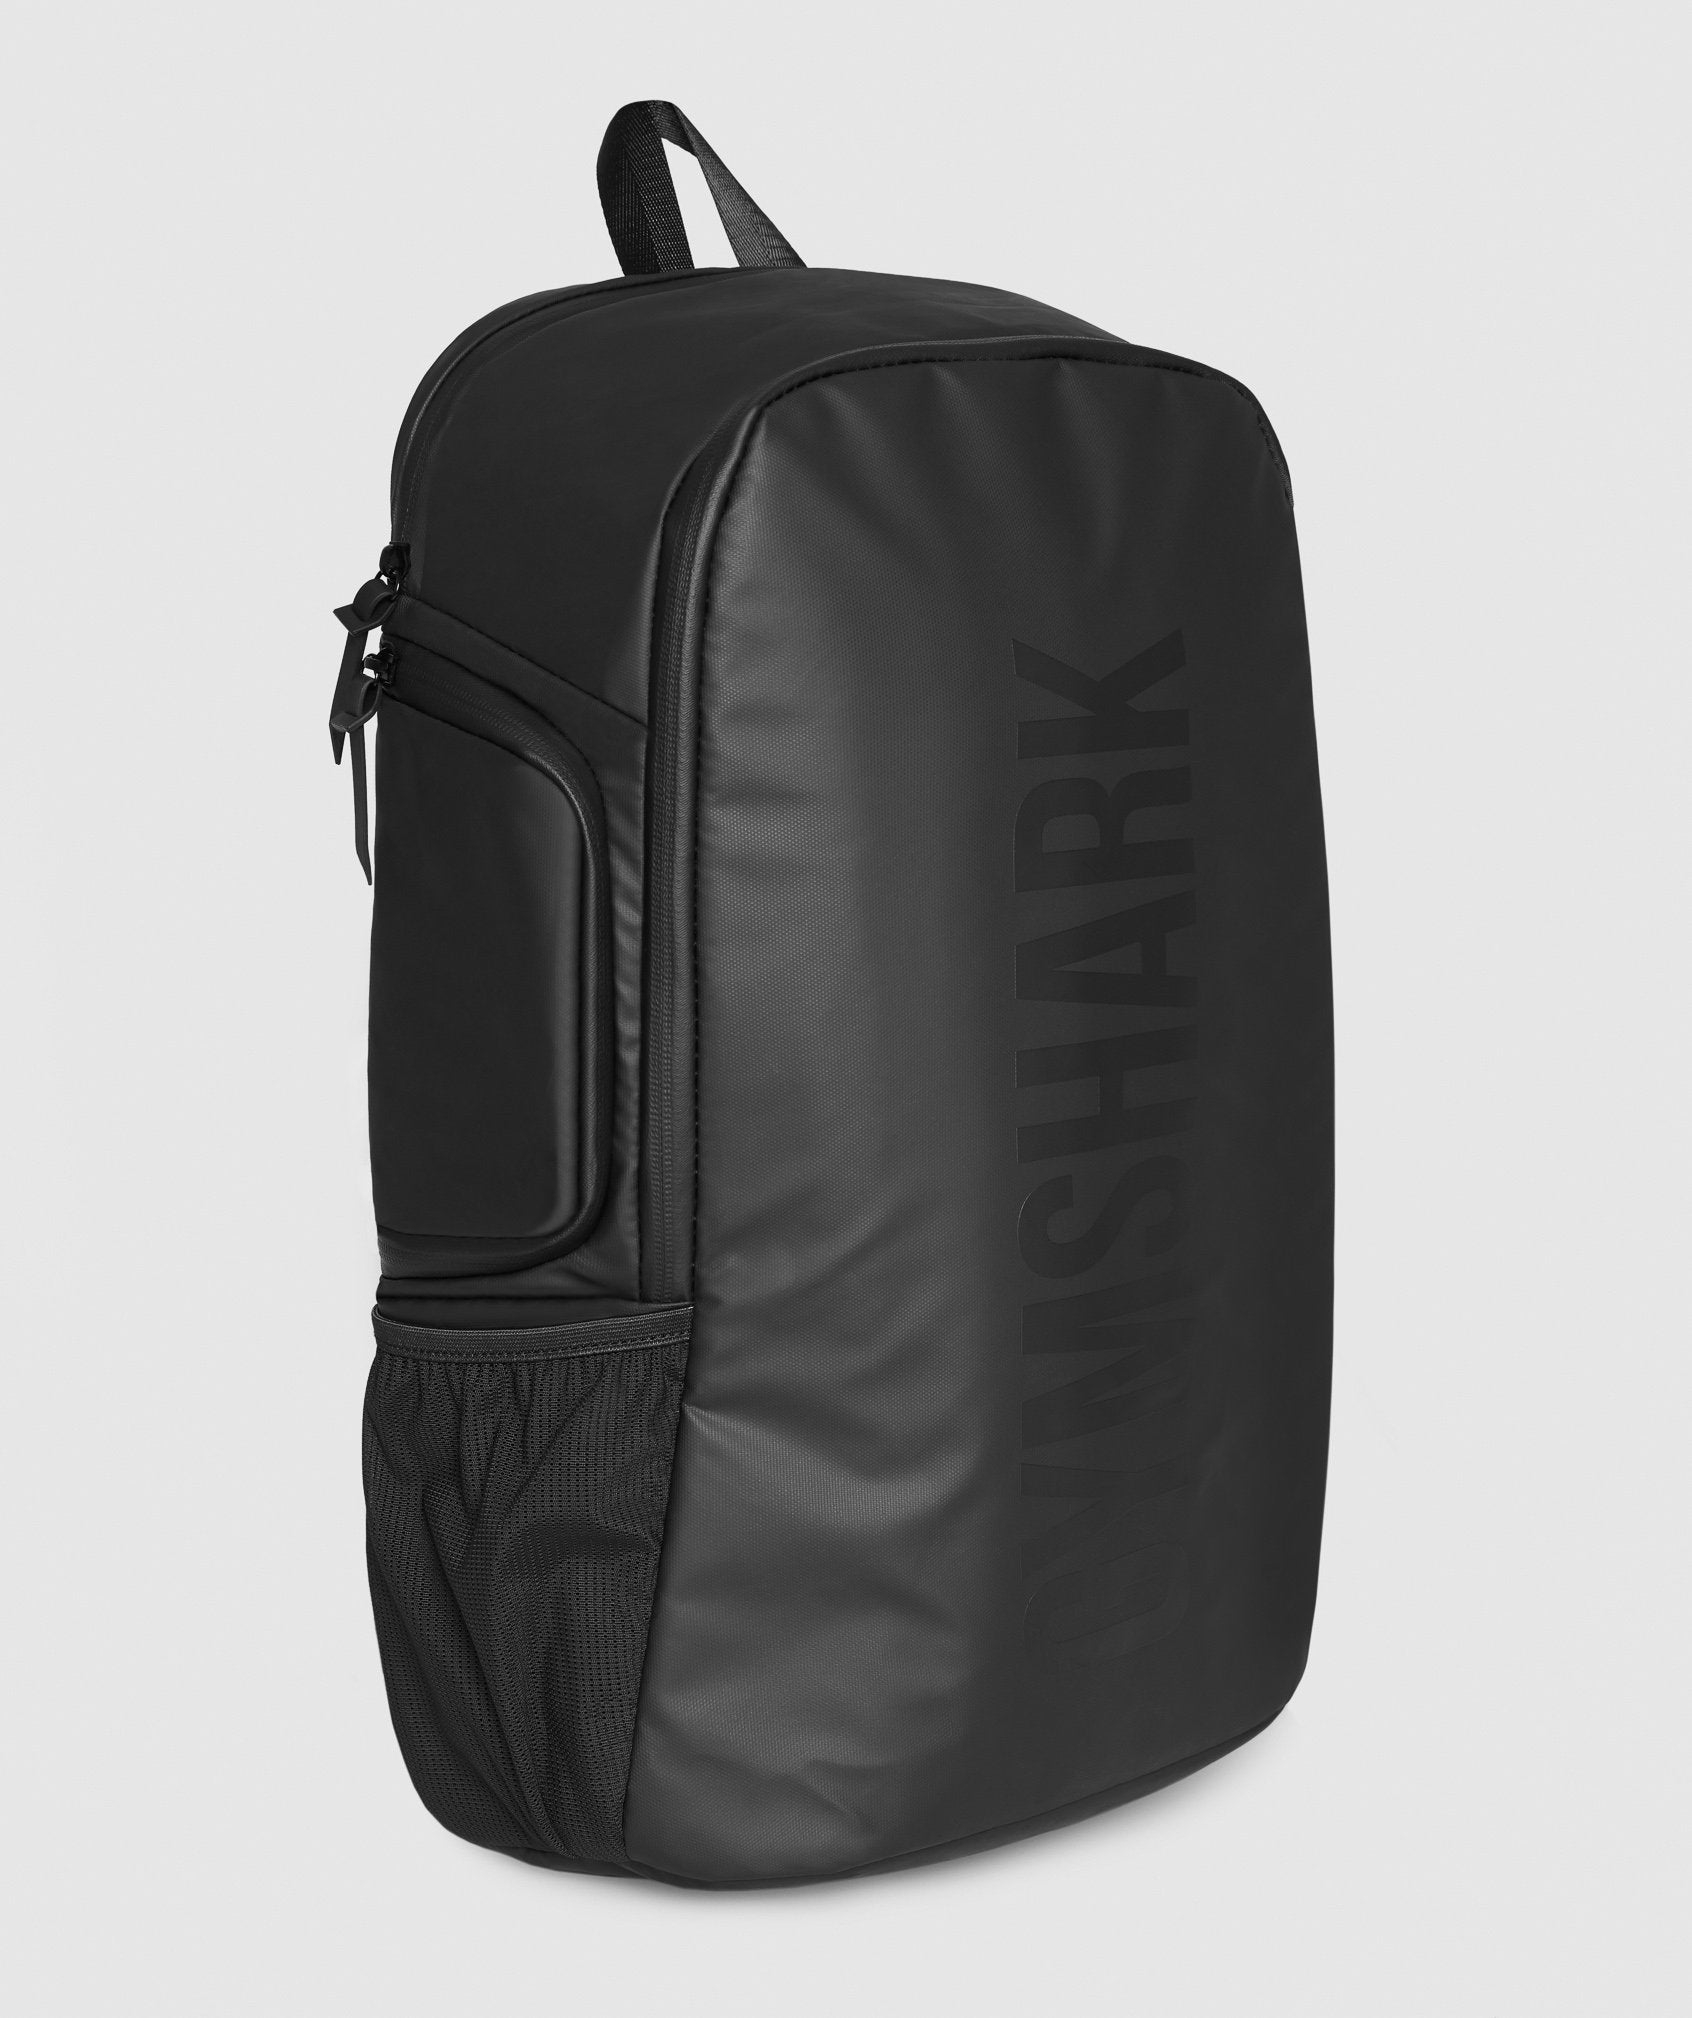 X Series Backpack 0.2 in Black - view 2